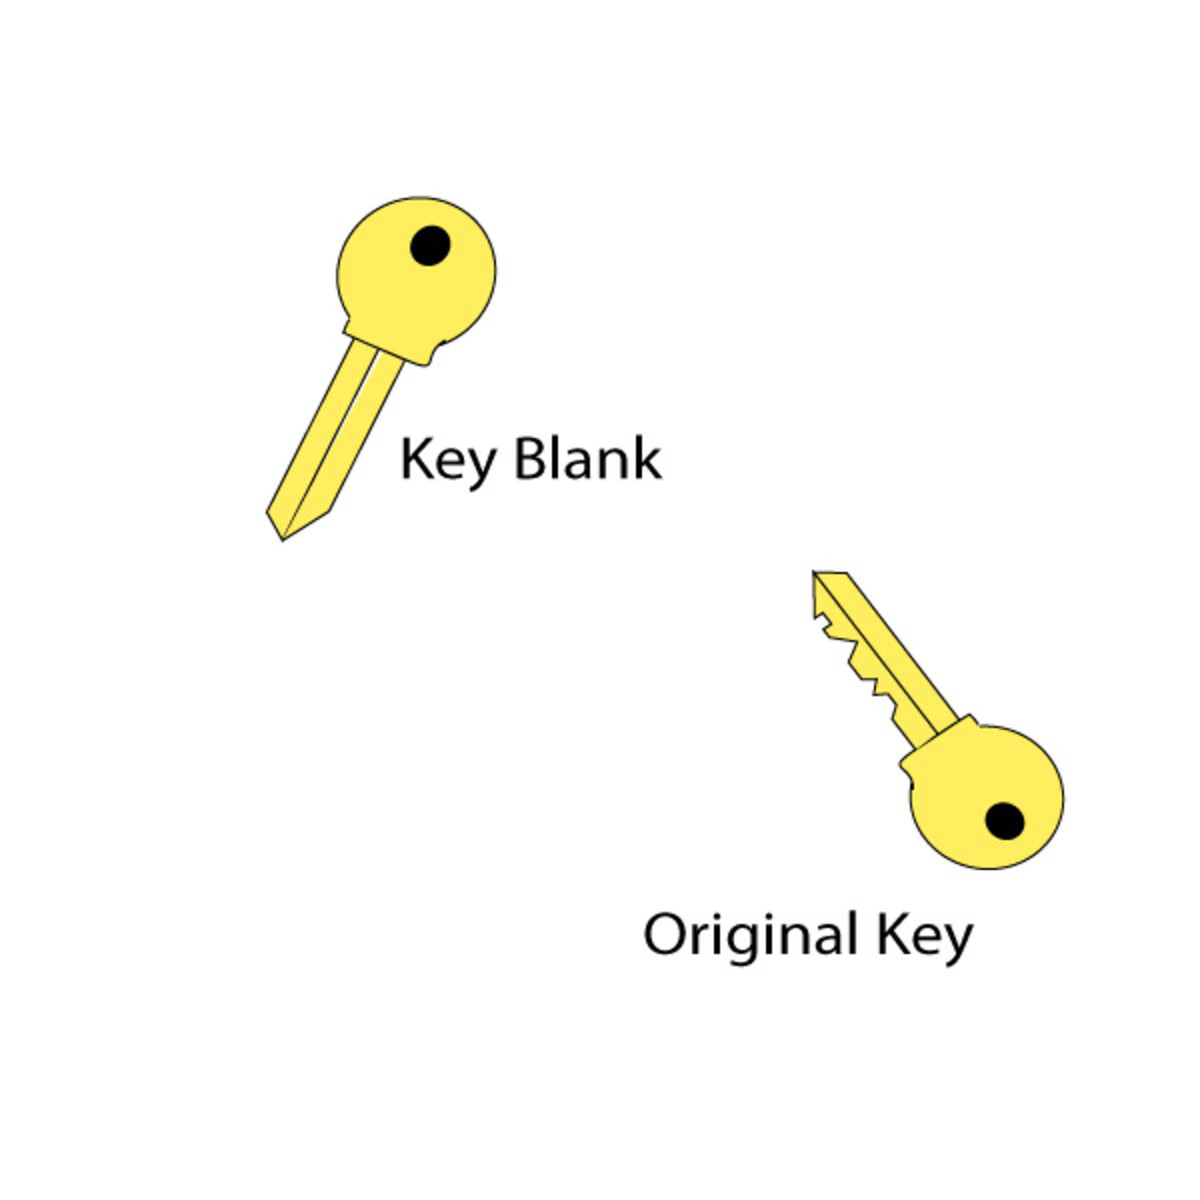 Key Blank vs. Original Key 